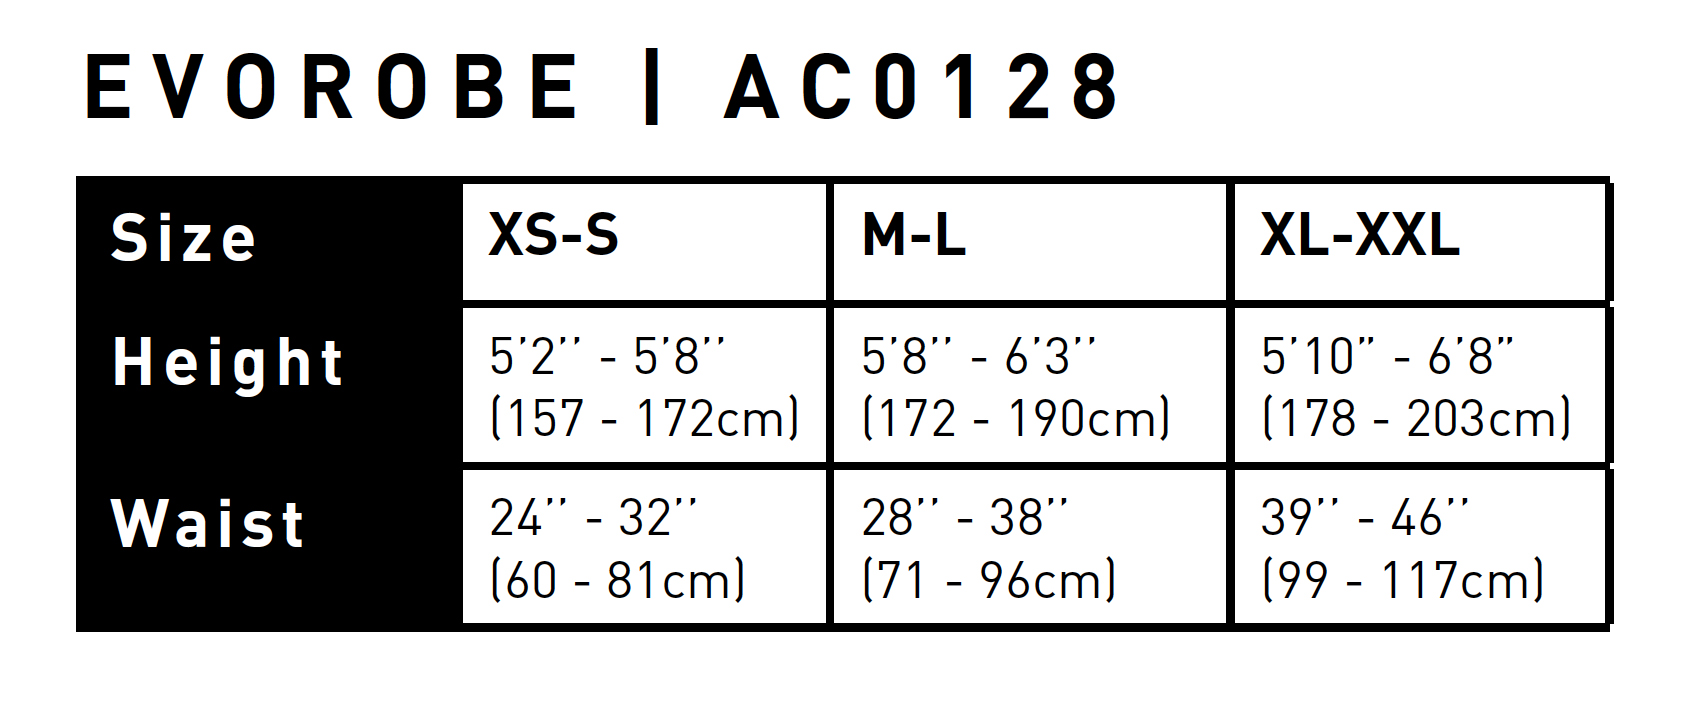 Gul EvoRobe Adult Size 2021 0 Size Chart